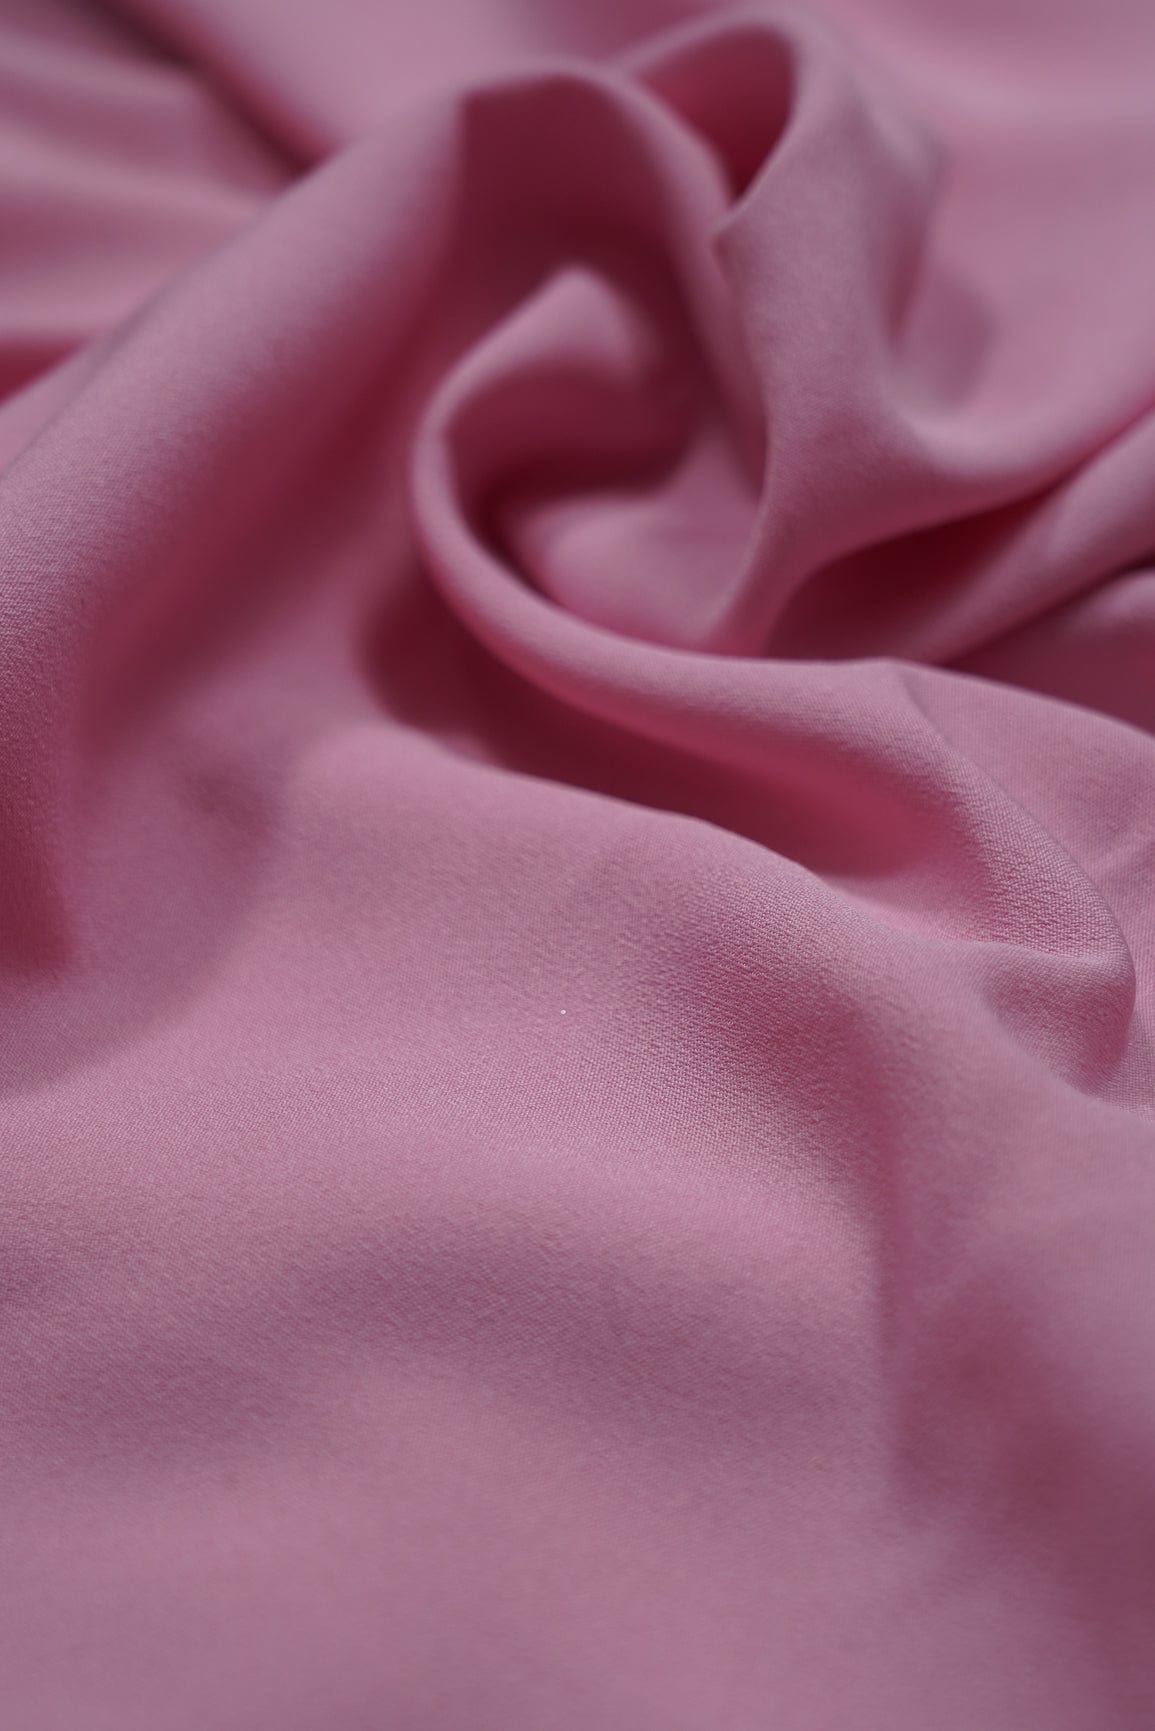 doeraa Plain Fabrics Baby Pink Dyed Crepe Fabric